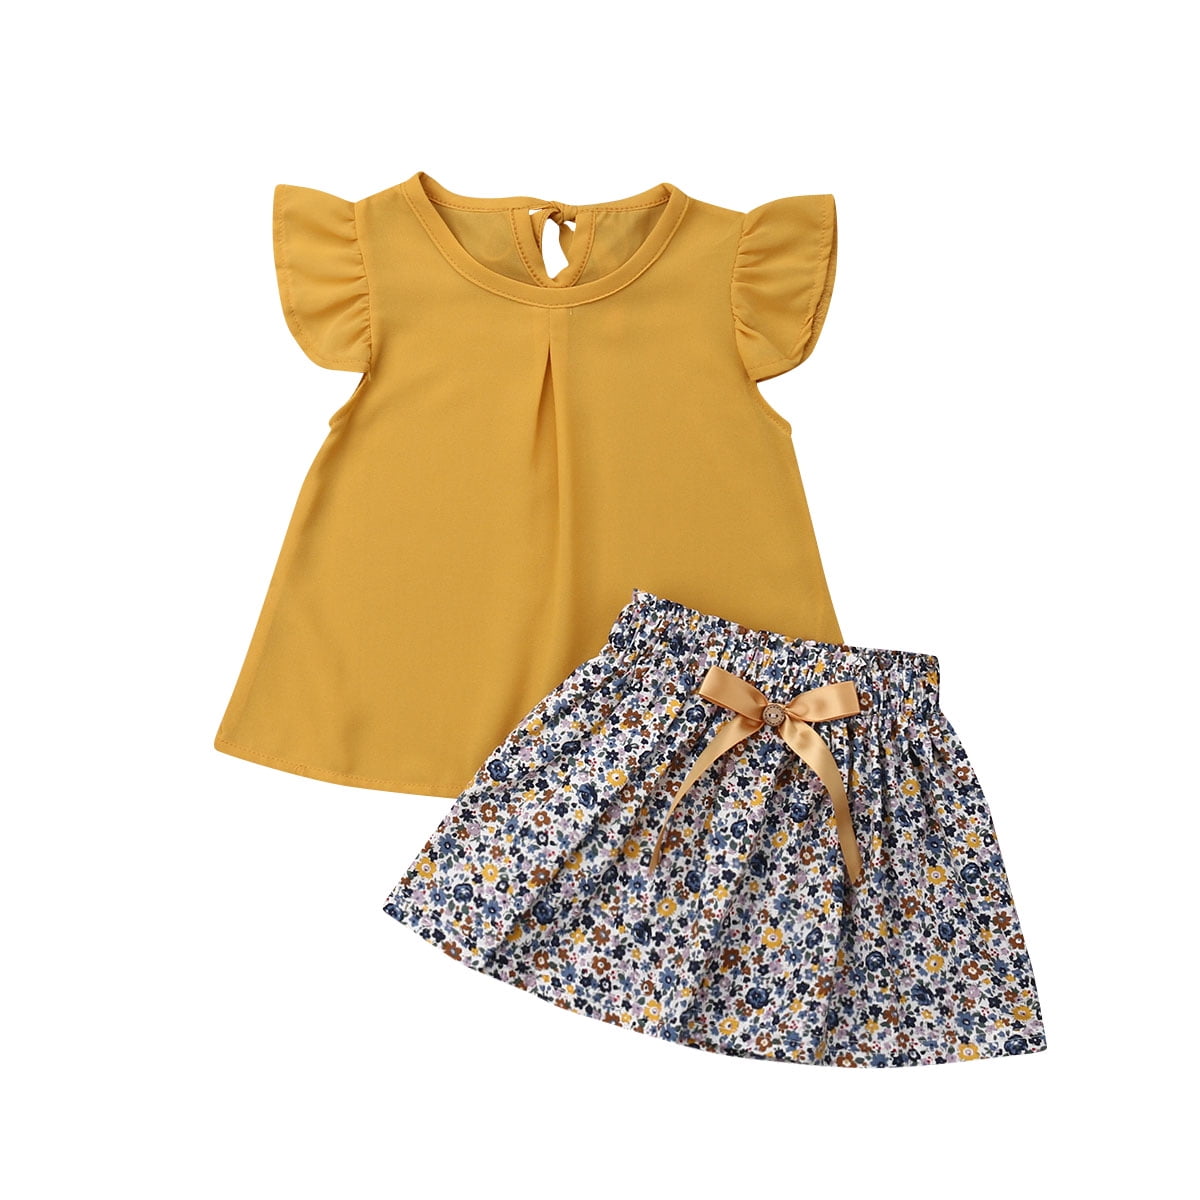 Kids Girls Stylish Outfits Decorate Bowknot Top+Elastic Waistband Skirts Sets 